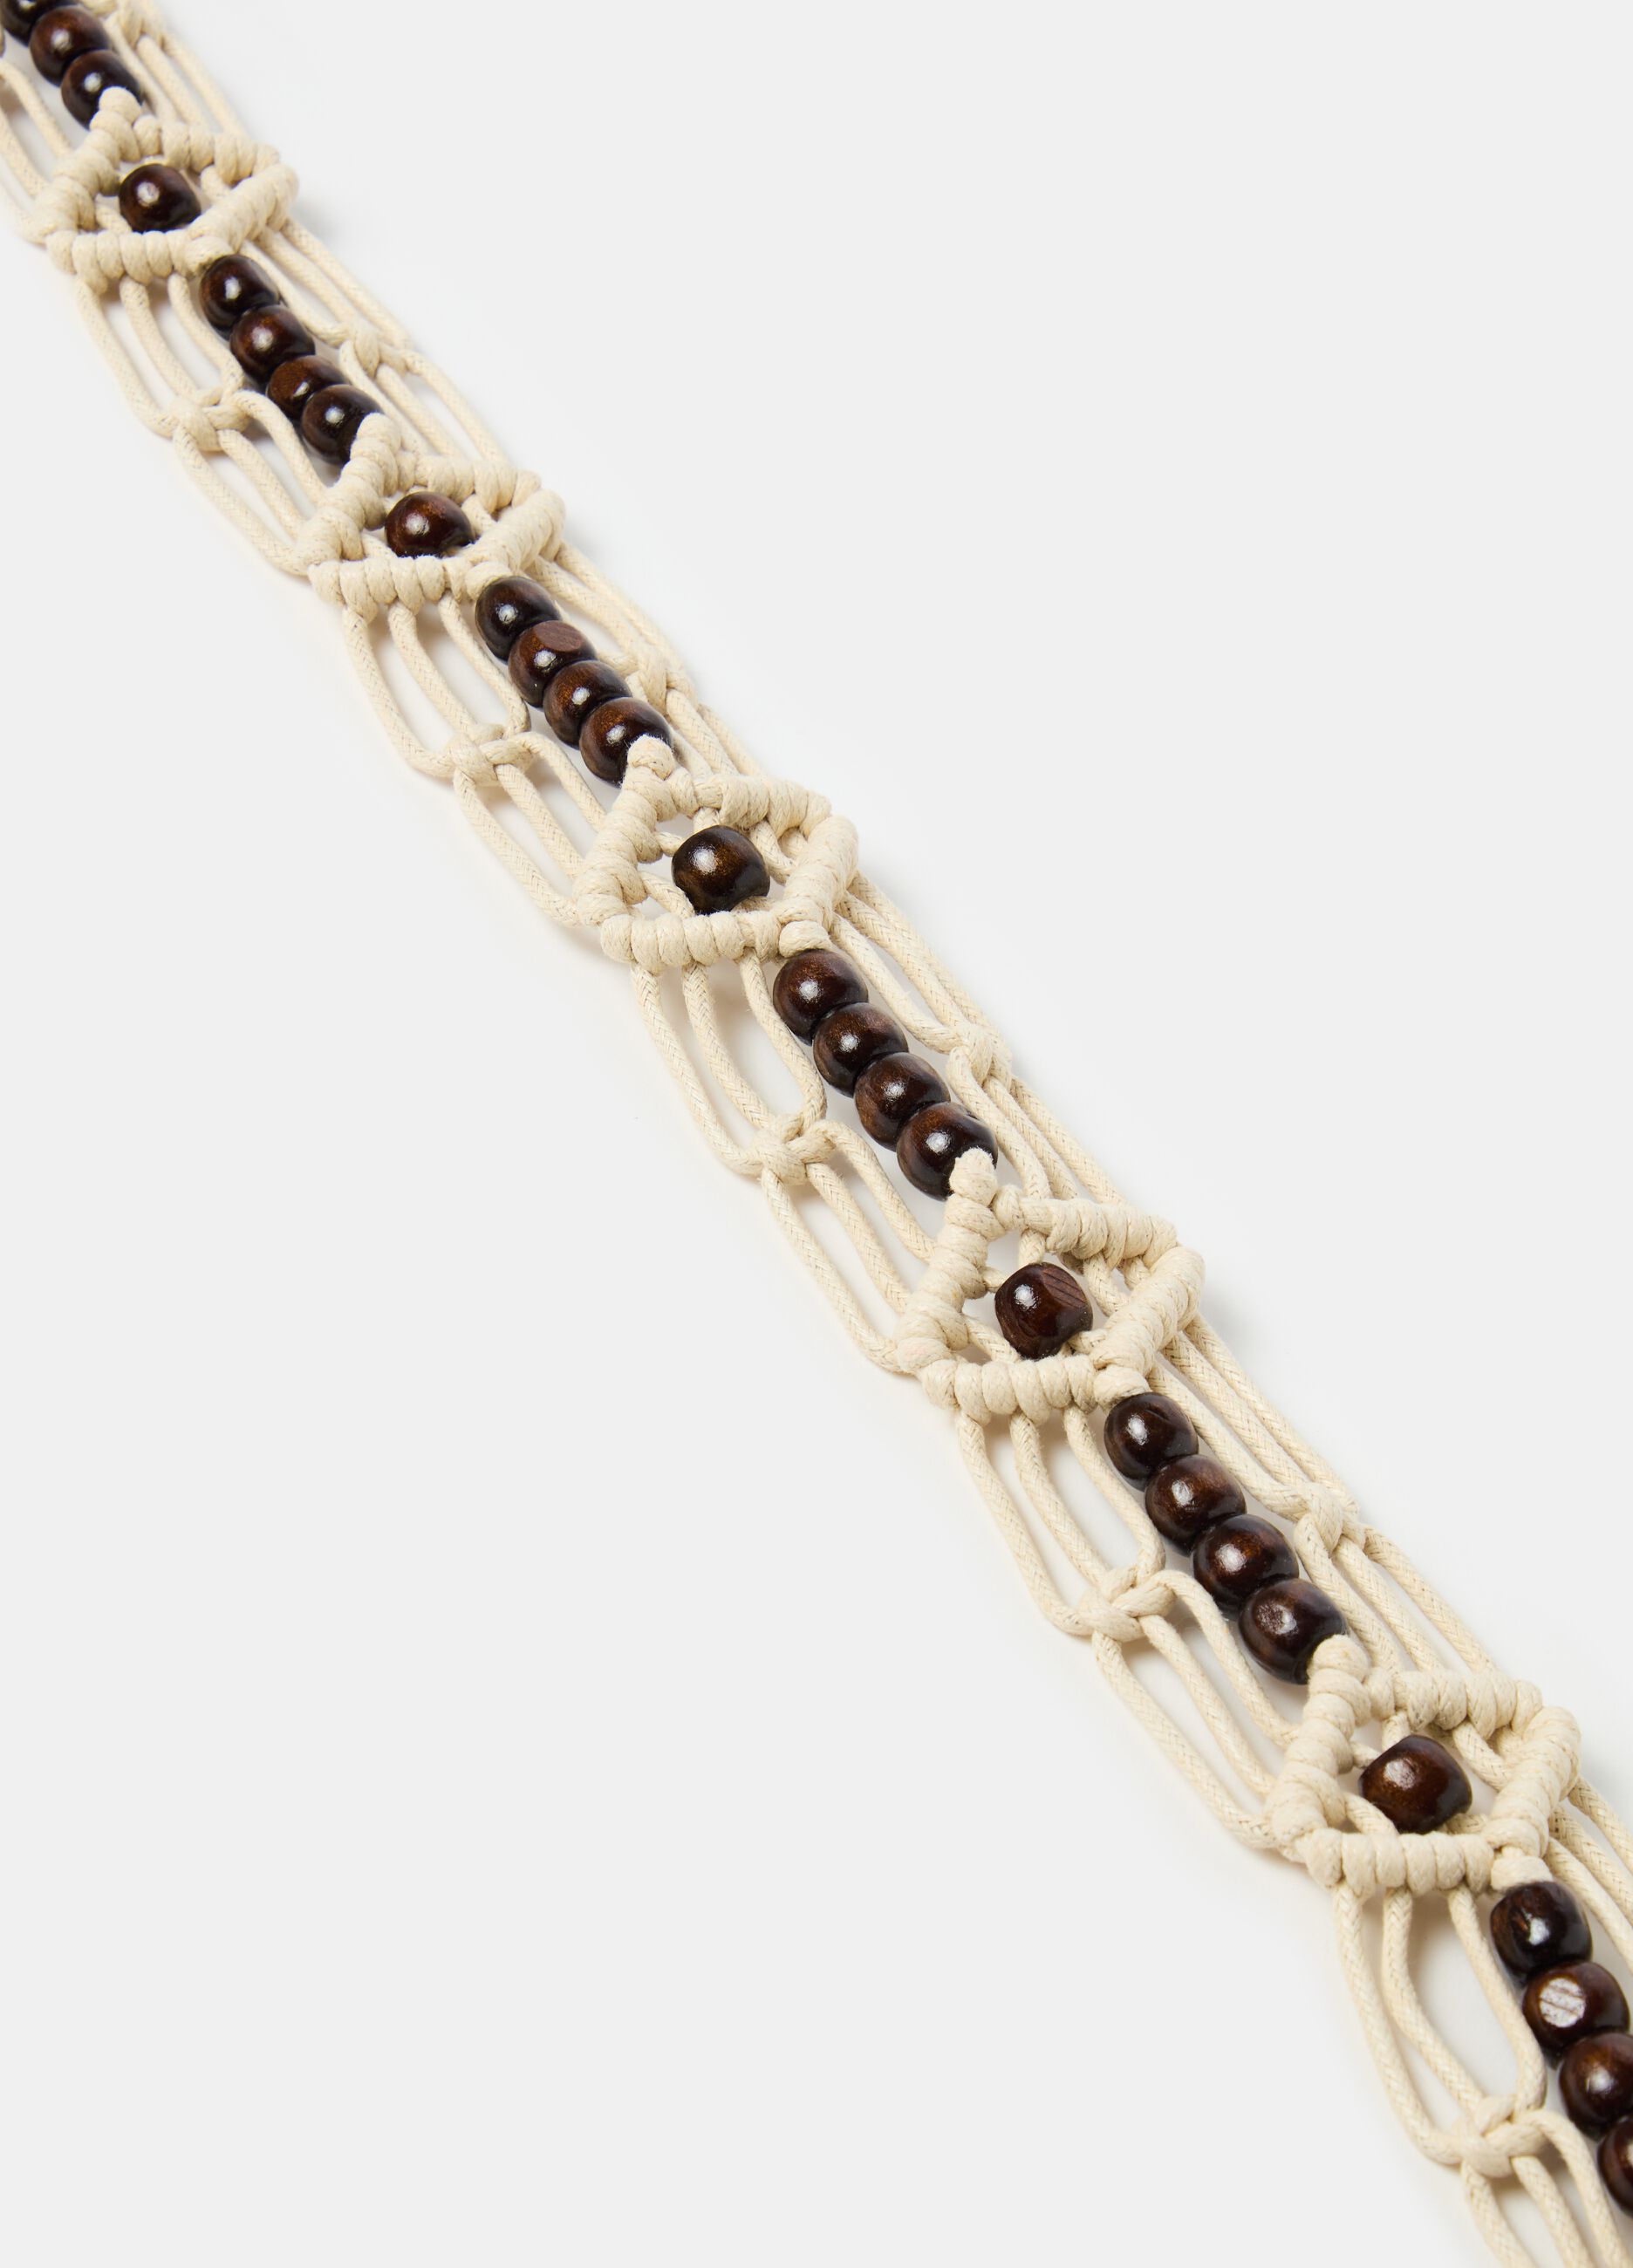 Crochet belt with beads